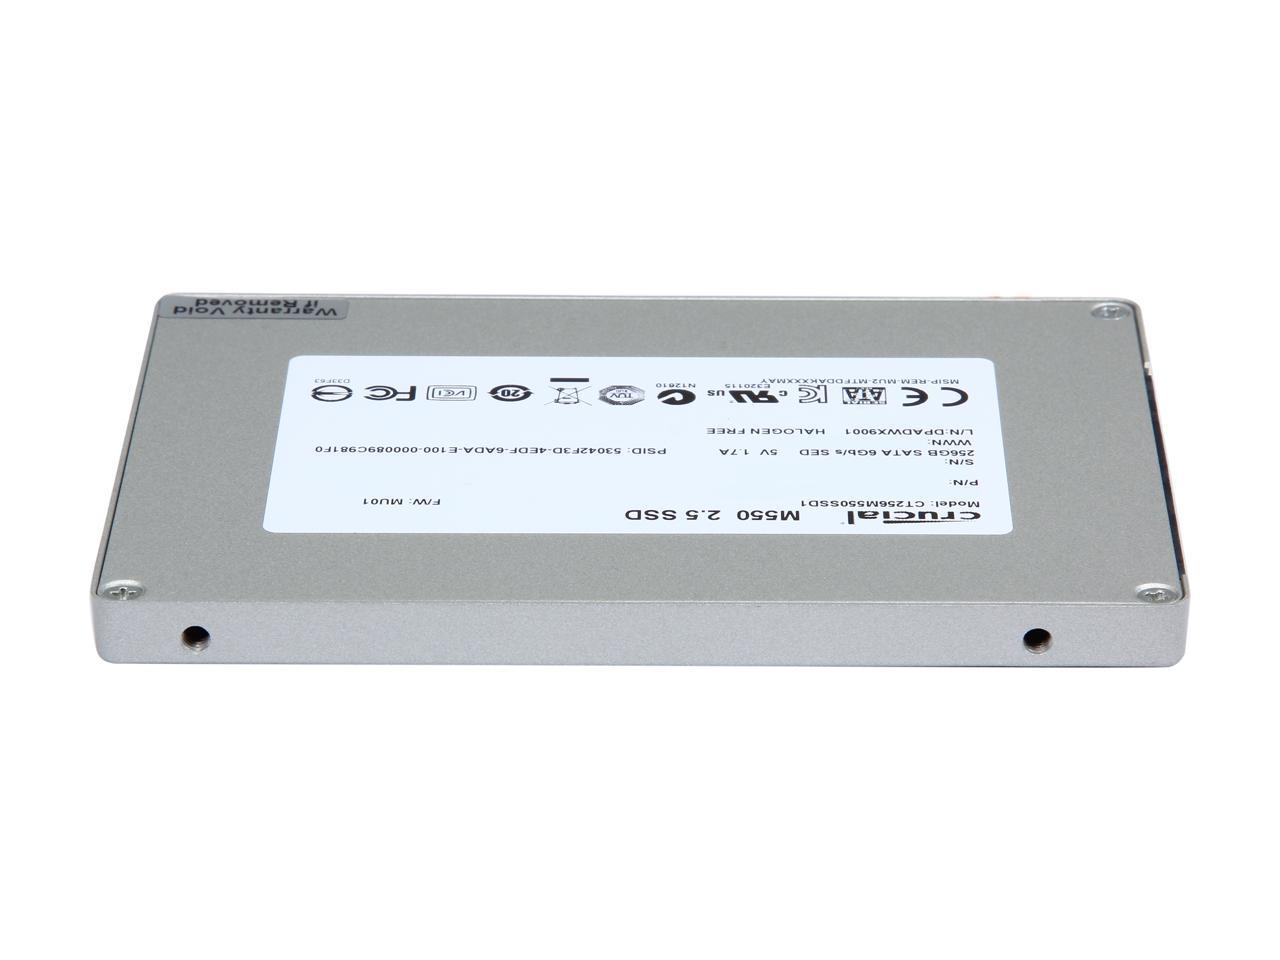 Crucial M550 2.5" 256GB SATA 6Gb/s MLC Internal Solid State Drive (SSD) CT256M550SSD1